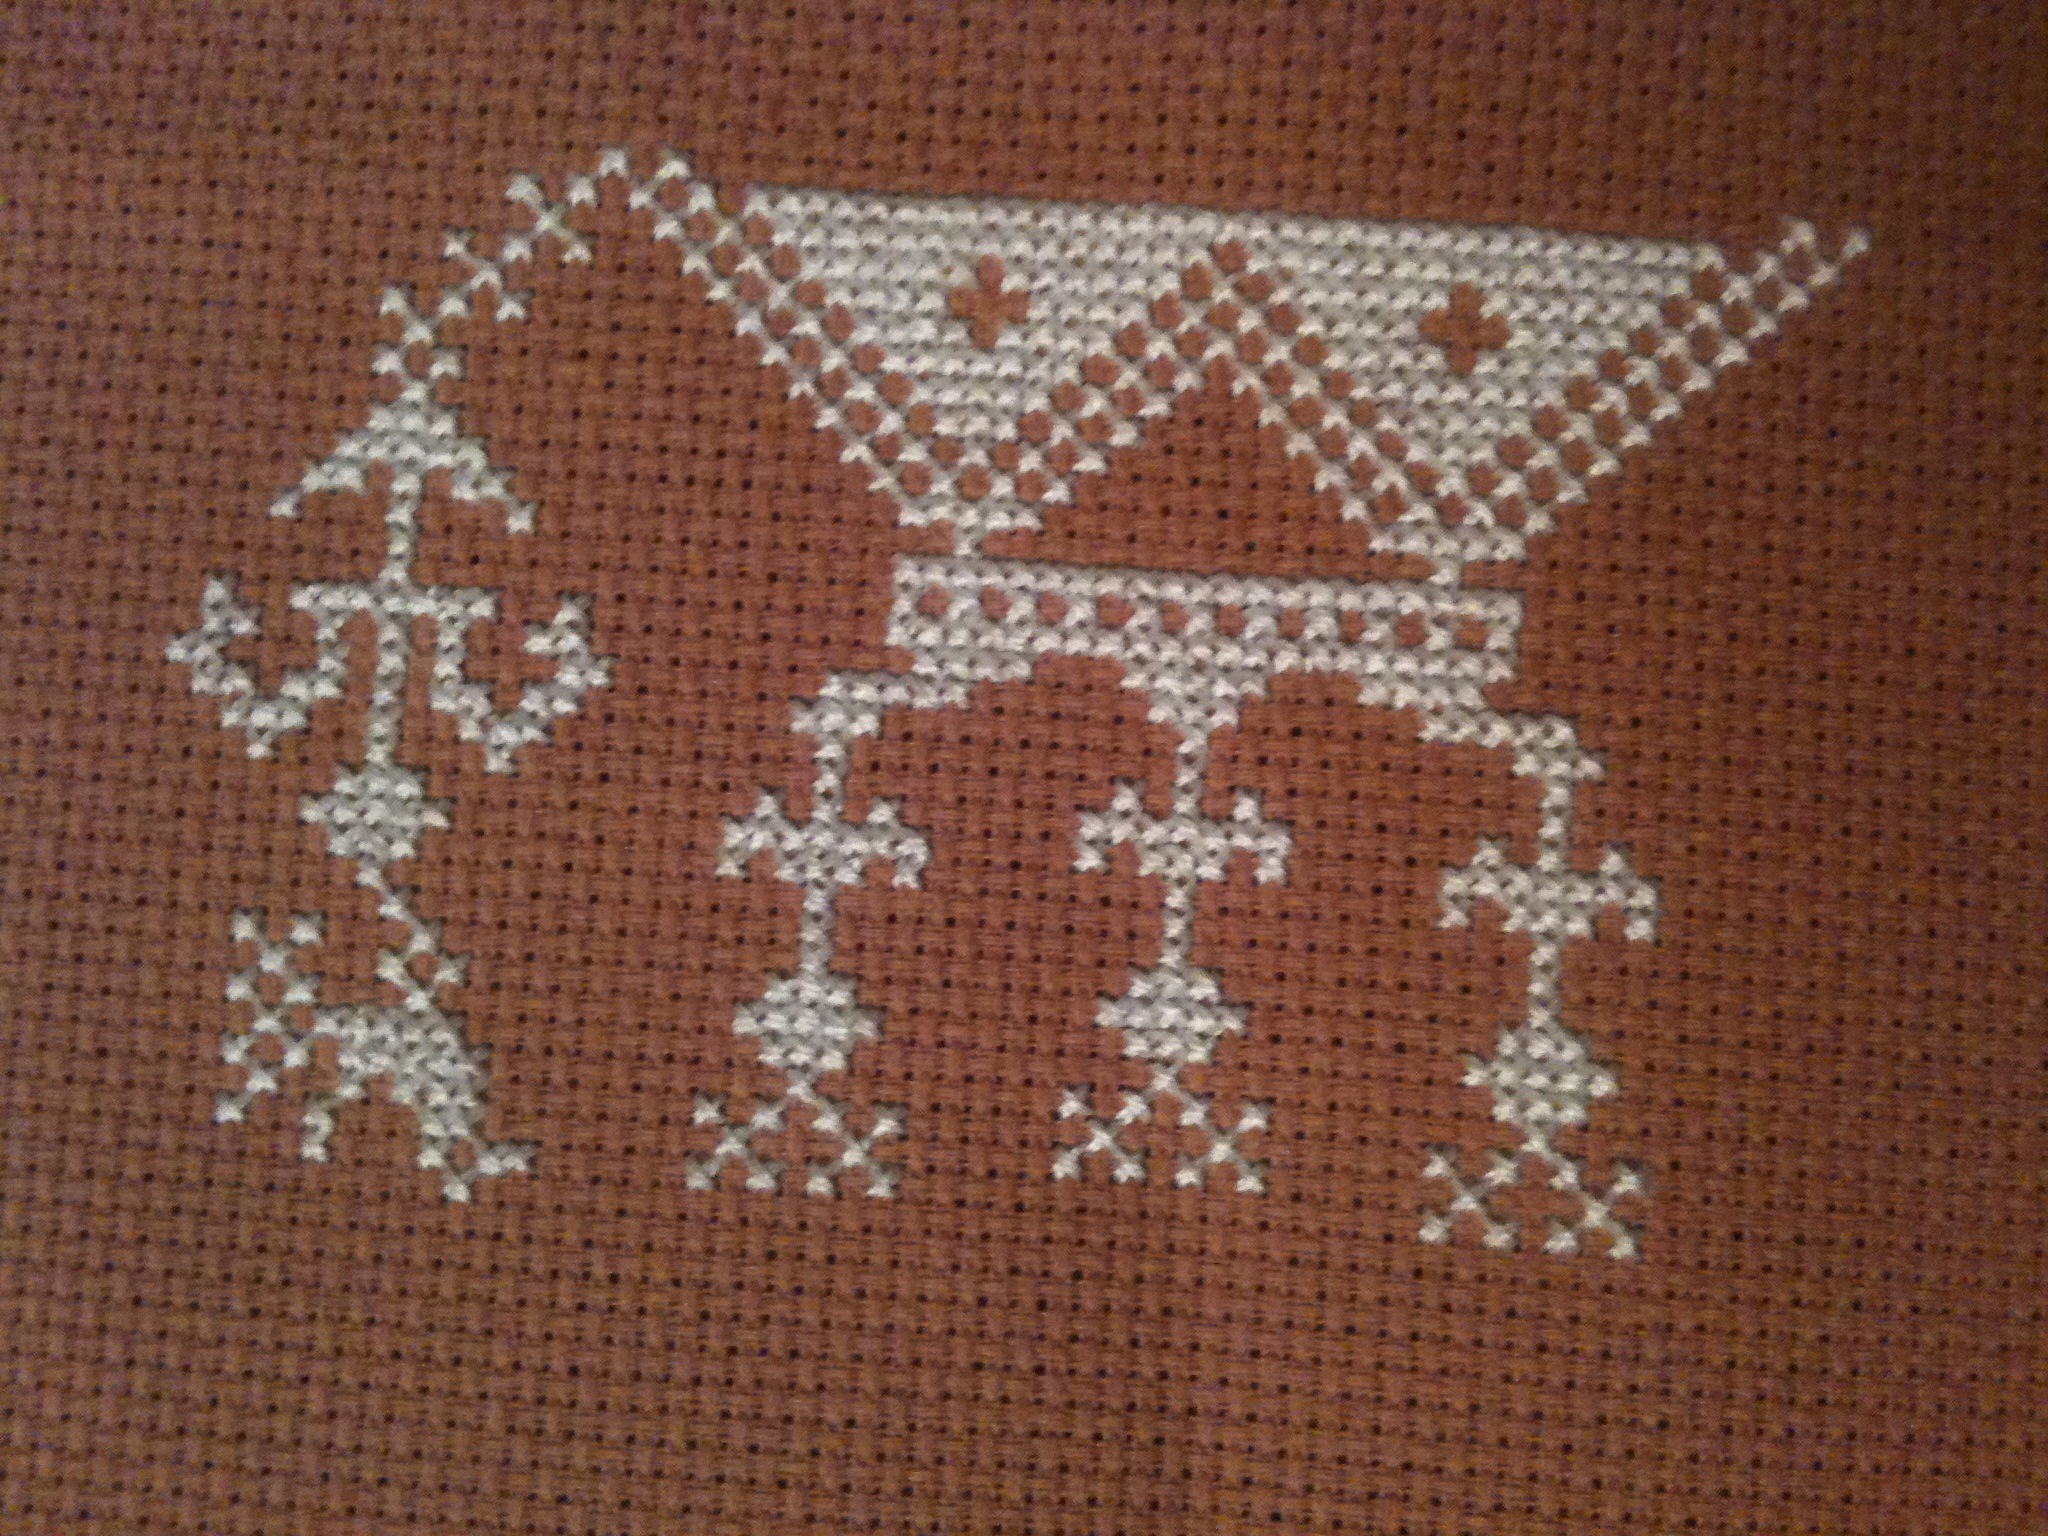 a cross stitch pattern on a piece of fabric